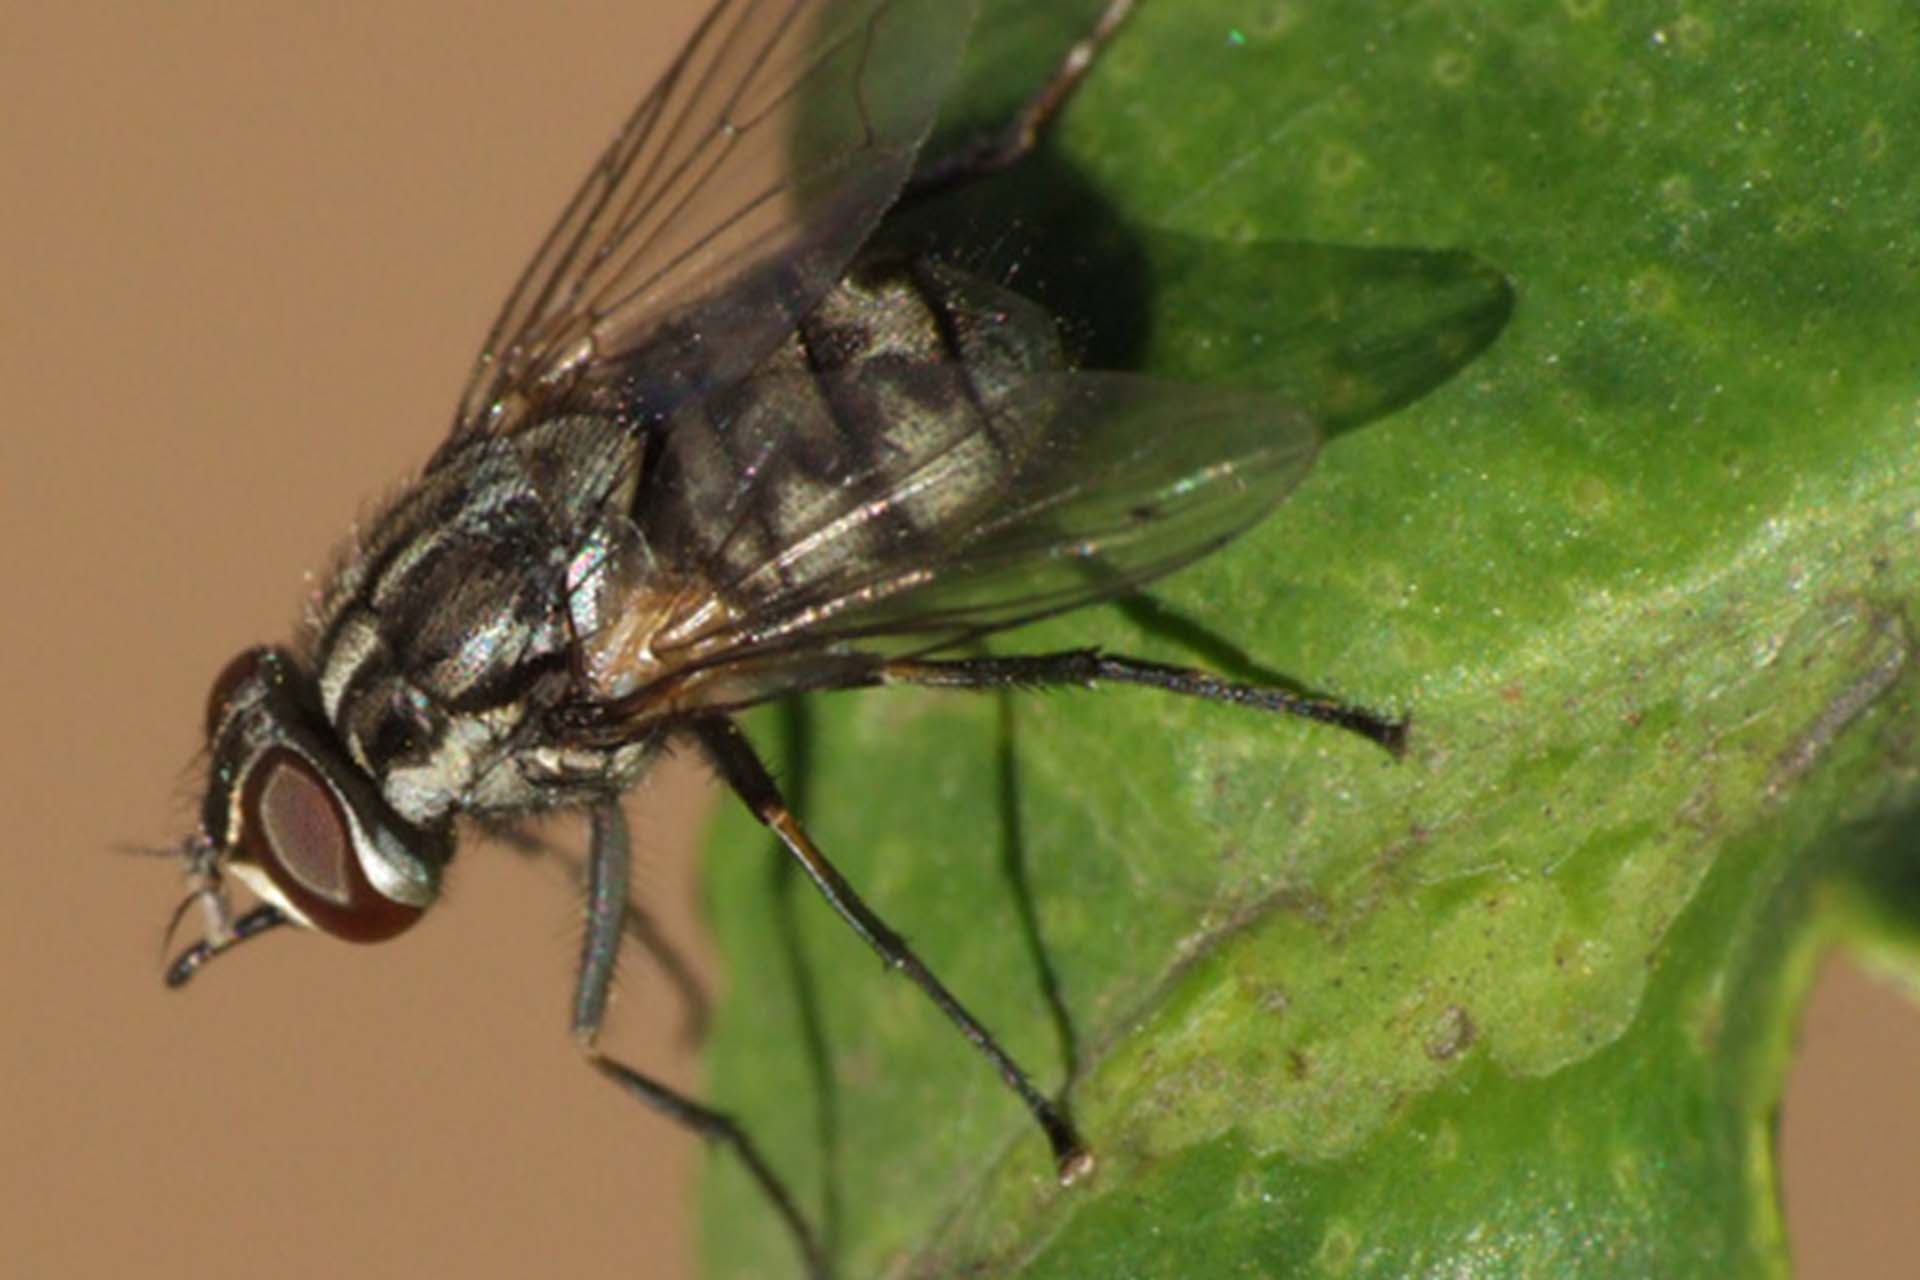 Stomoxys calcitrans (common name: Horsefly)